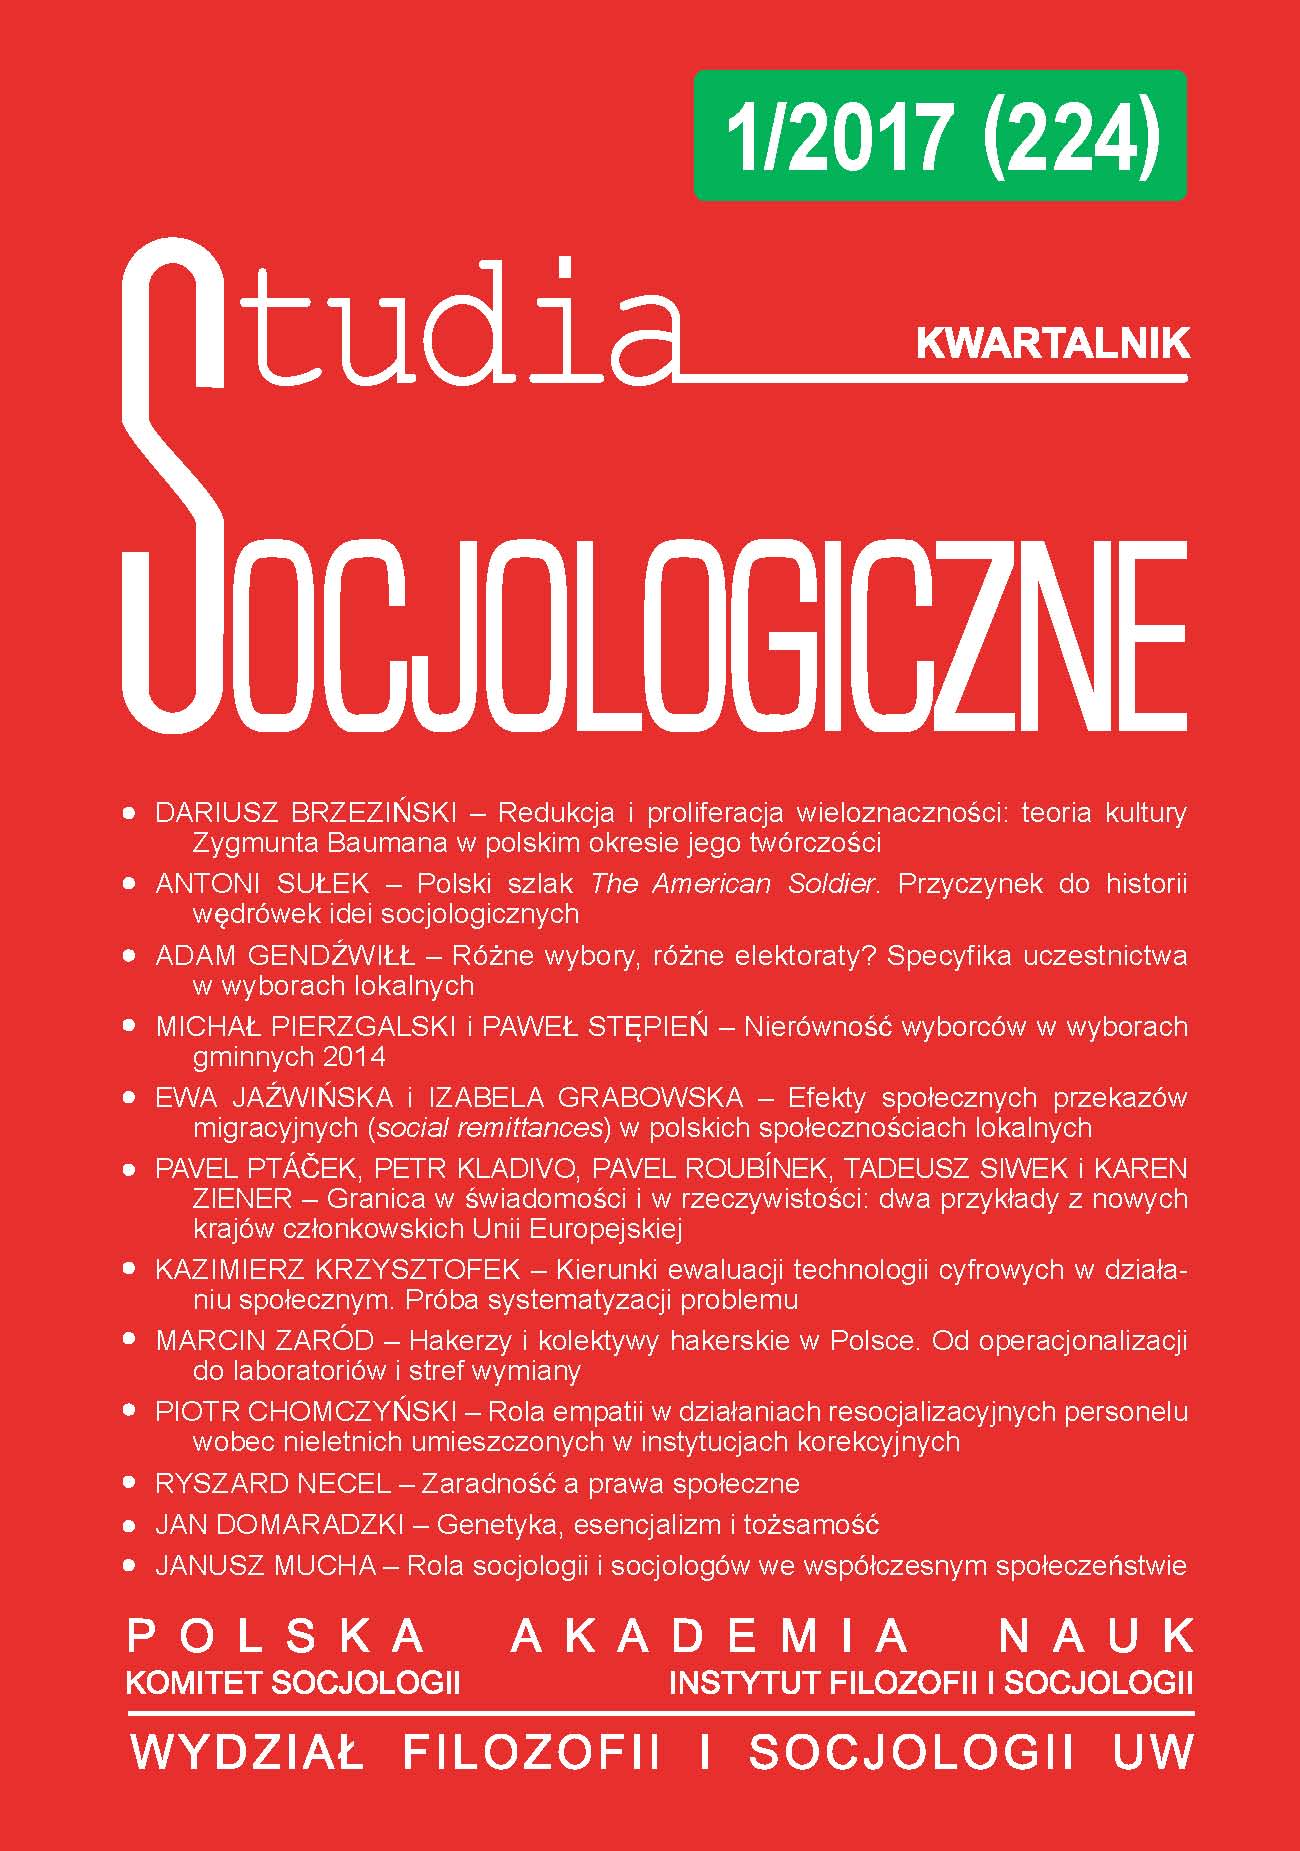 Zygmunt Bauman Poznan affinity Cover Image